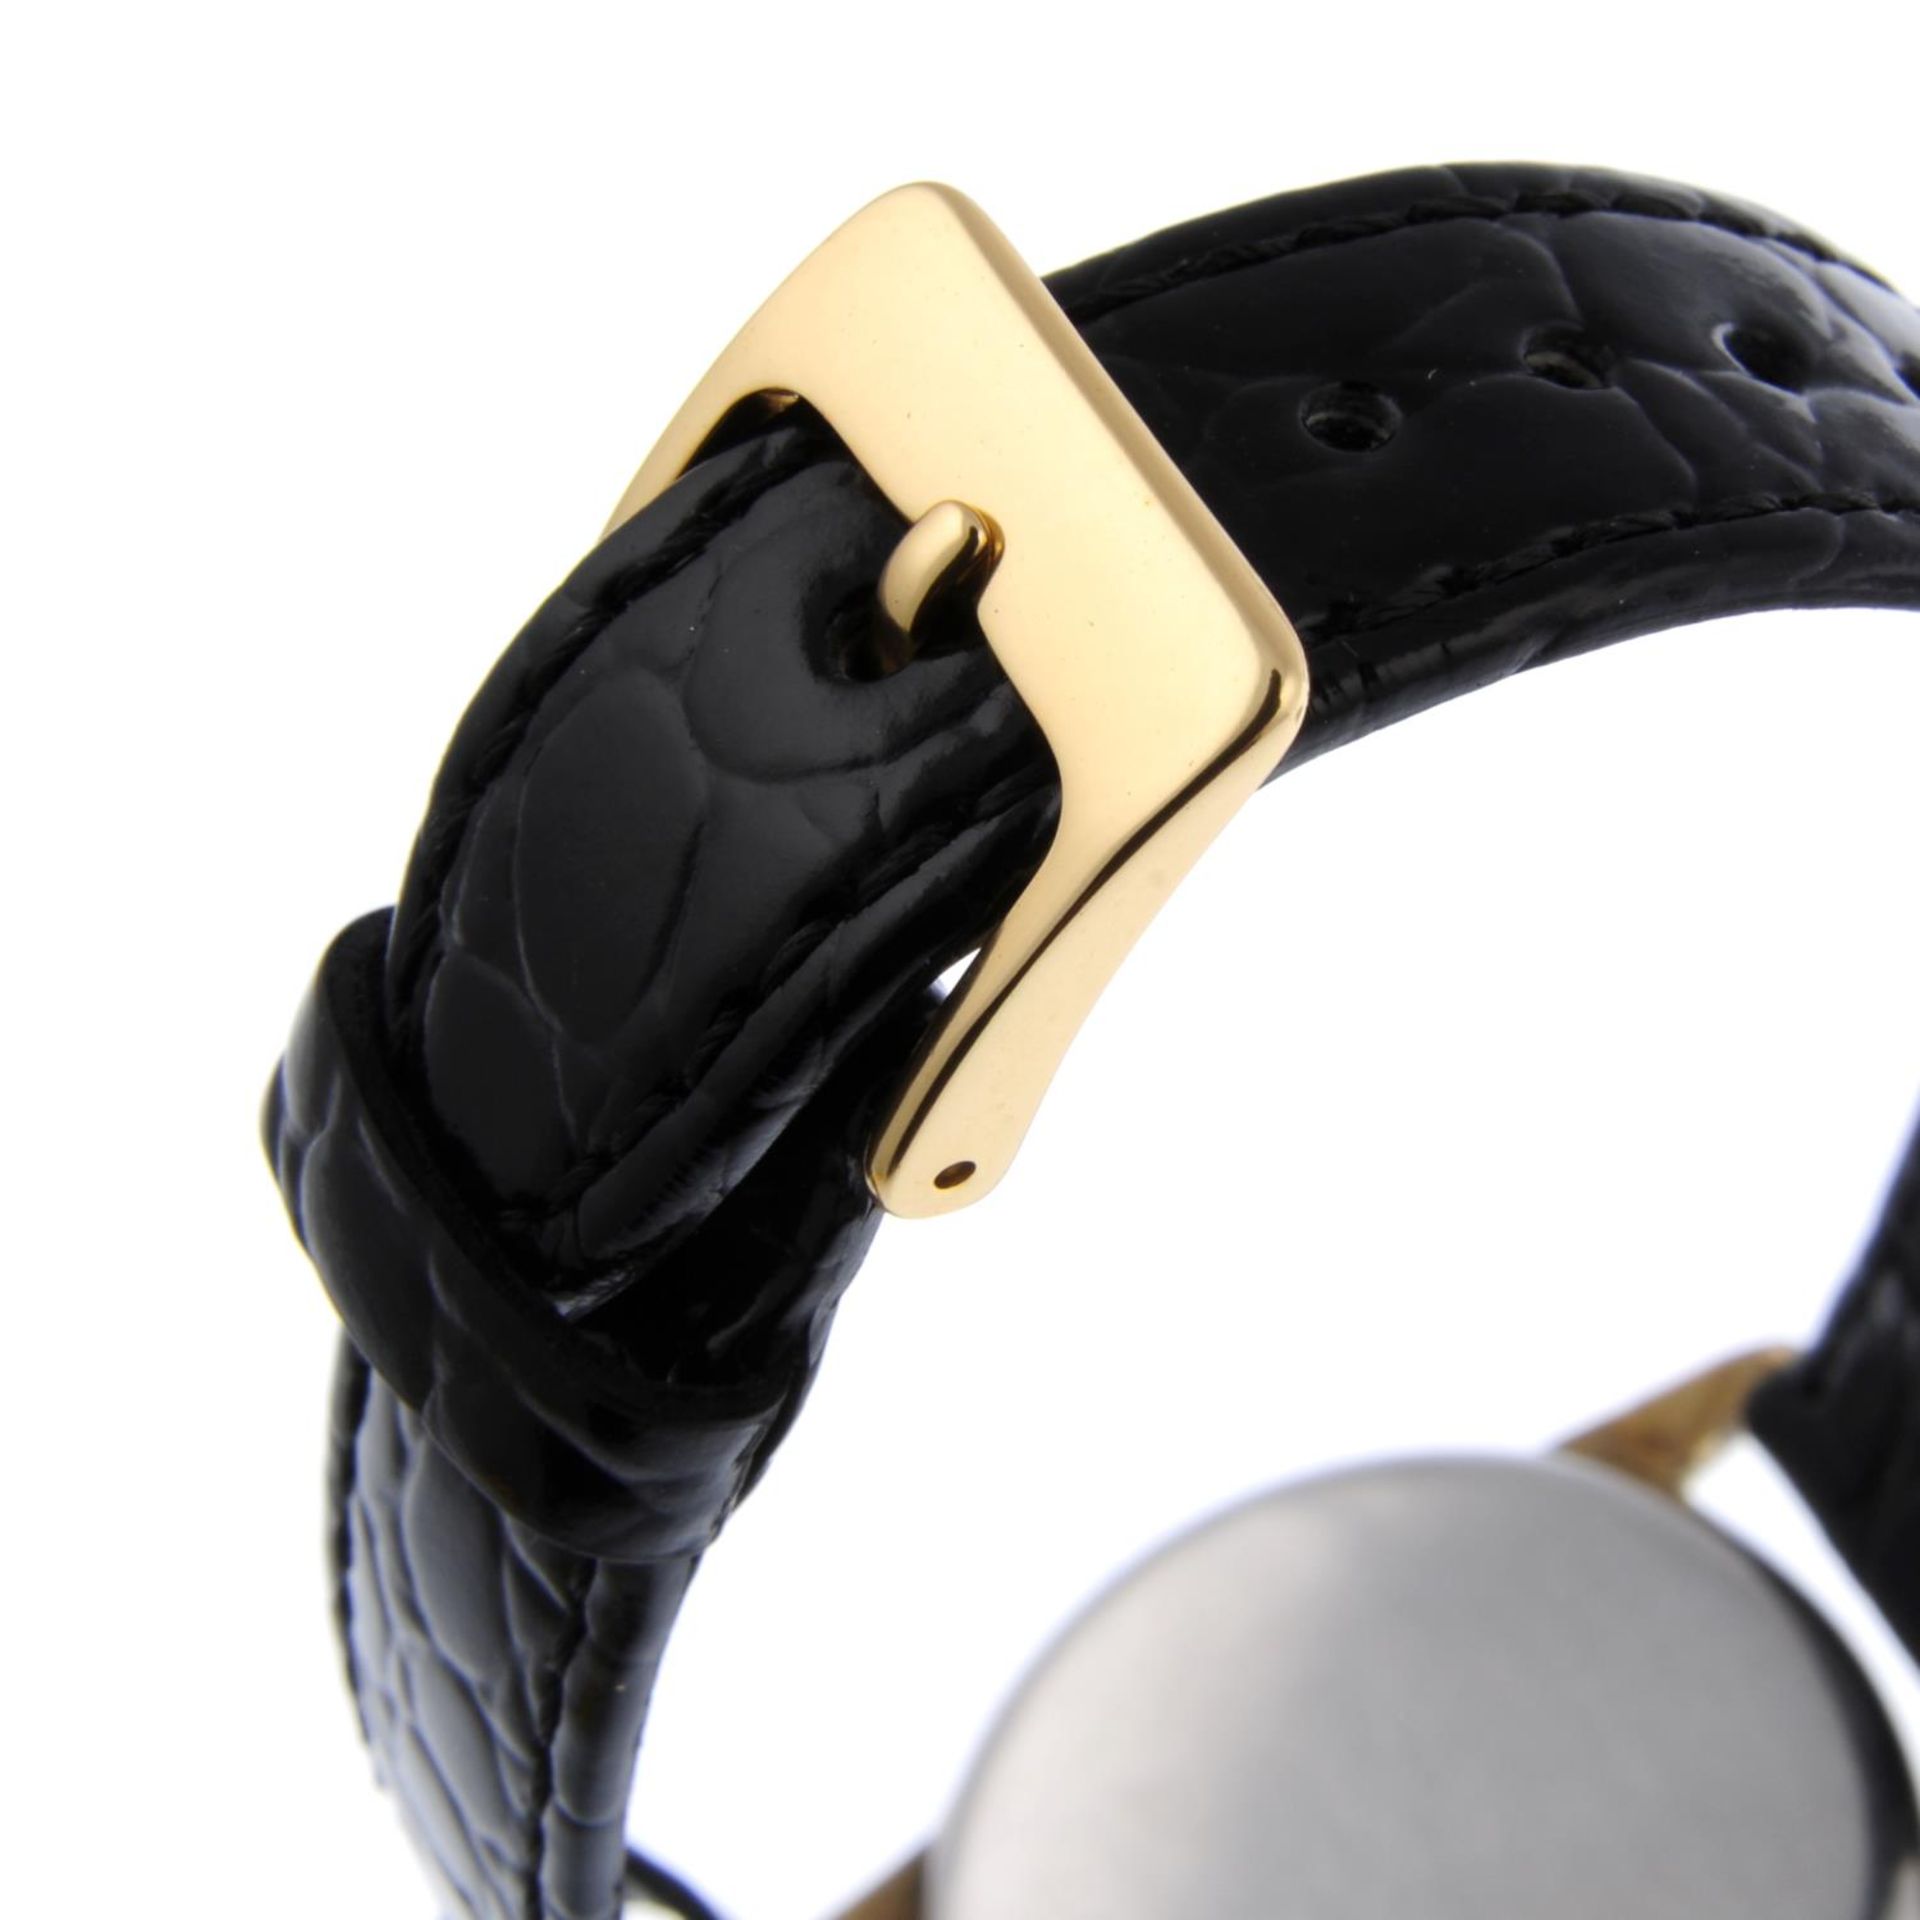 MOVADO - a gentleman's triple-date wrist watch. - Image 2 of 4